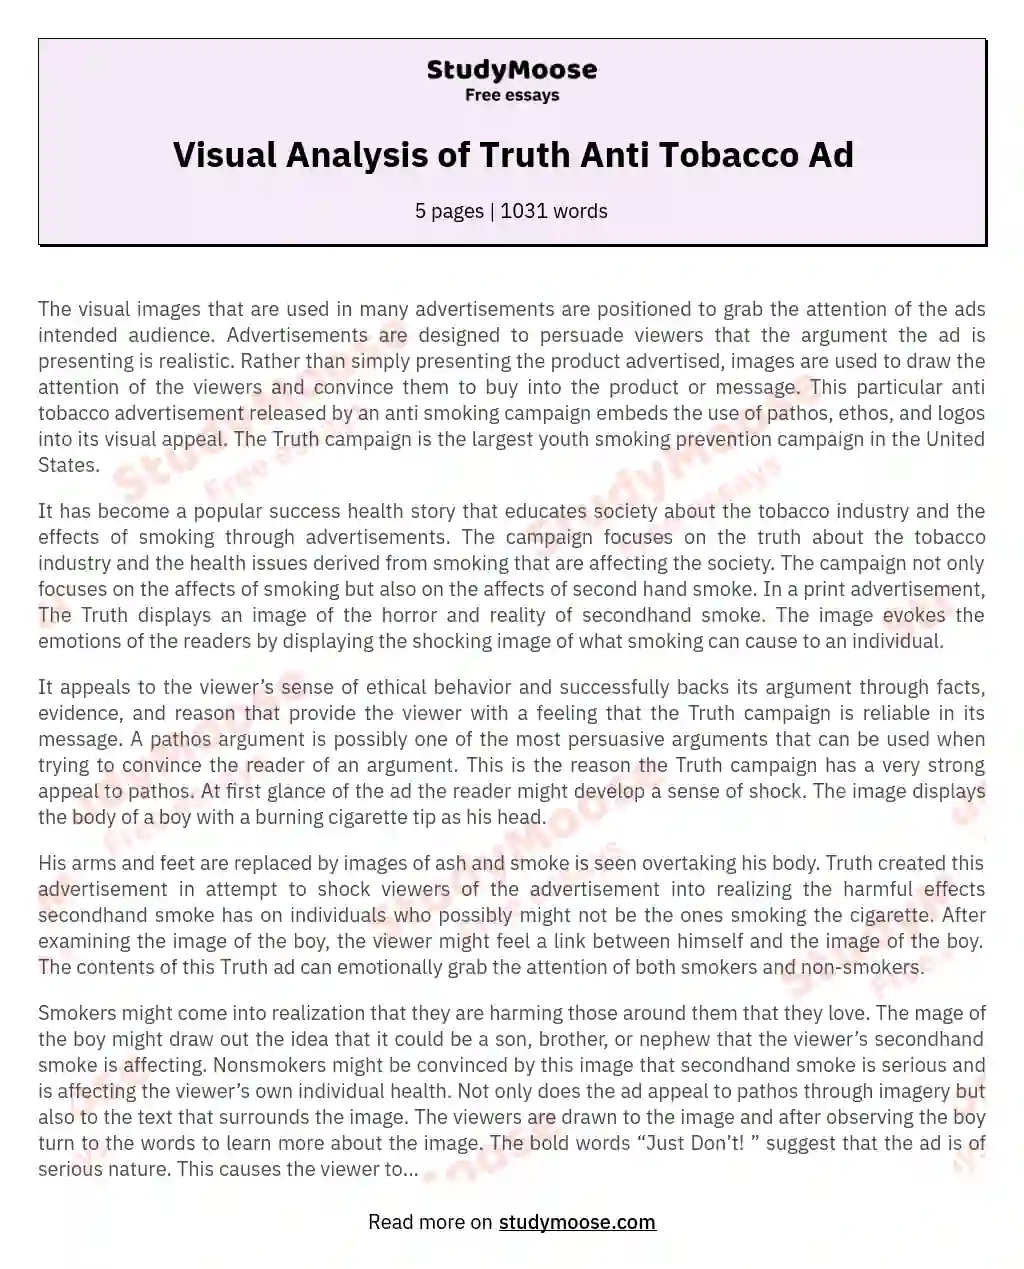 Visual Analysis of Truth Anti Tobacco Ad